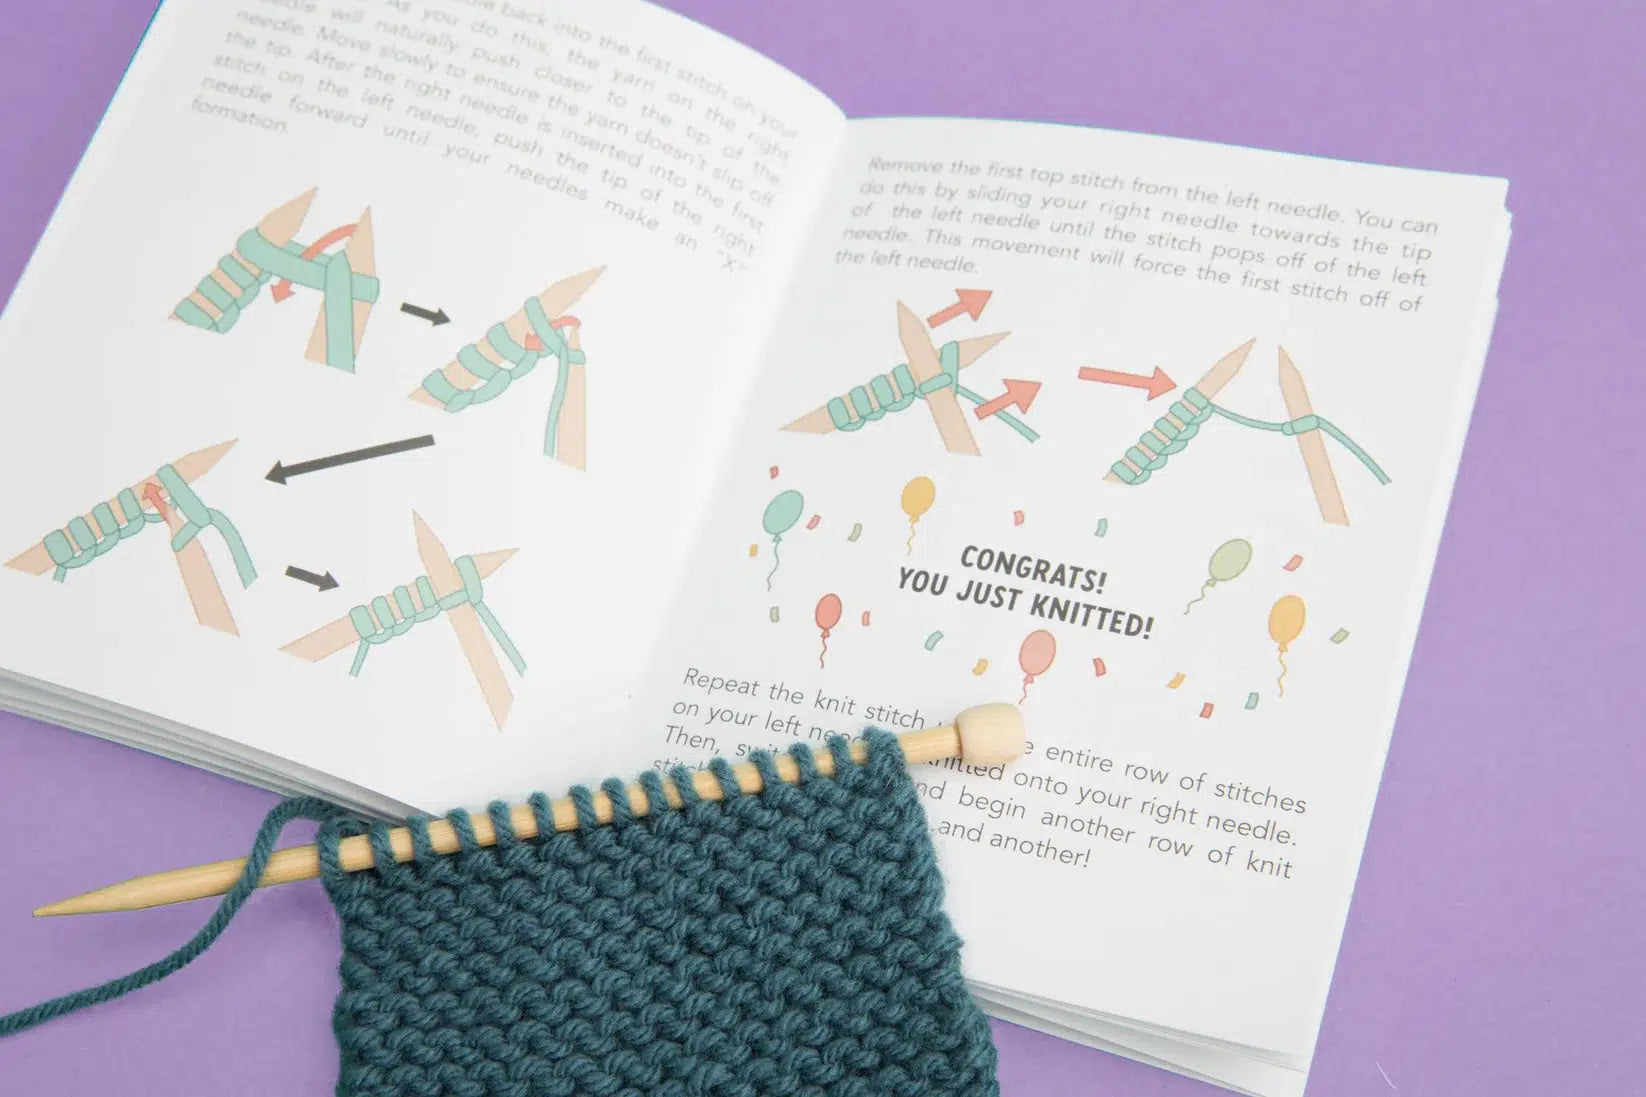 Acorns & Twigs  Knitting Scarf Kit by Friendly Loom™